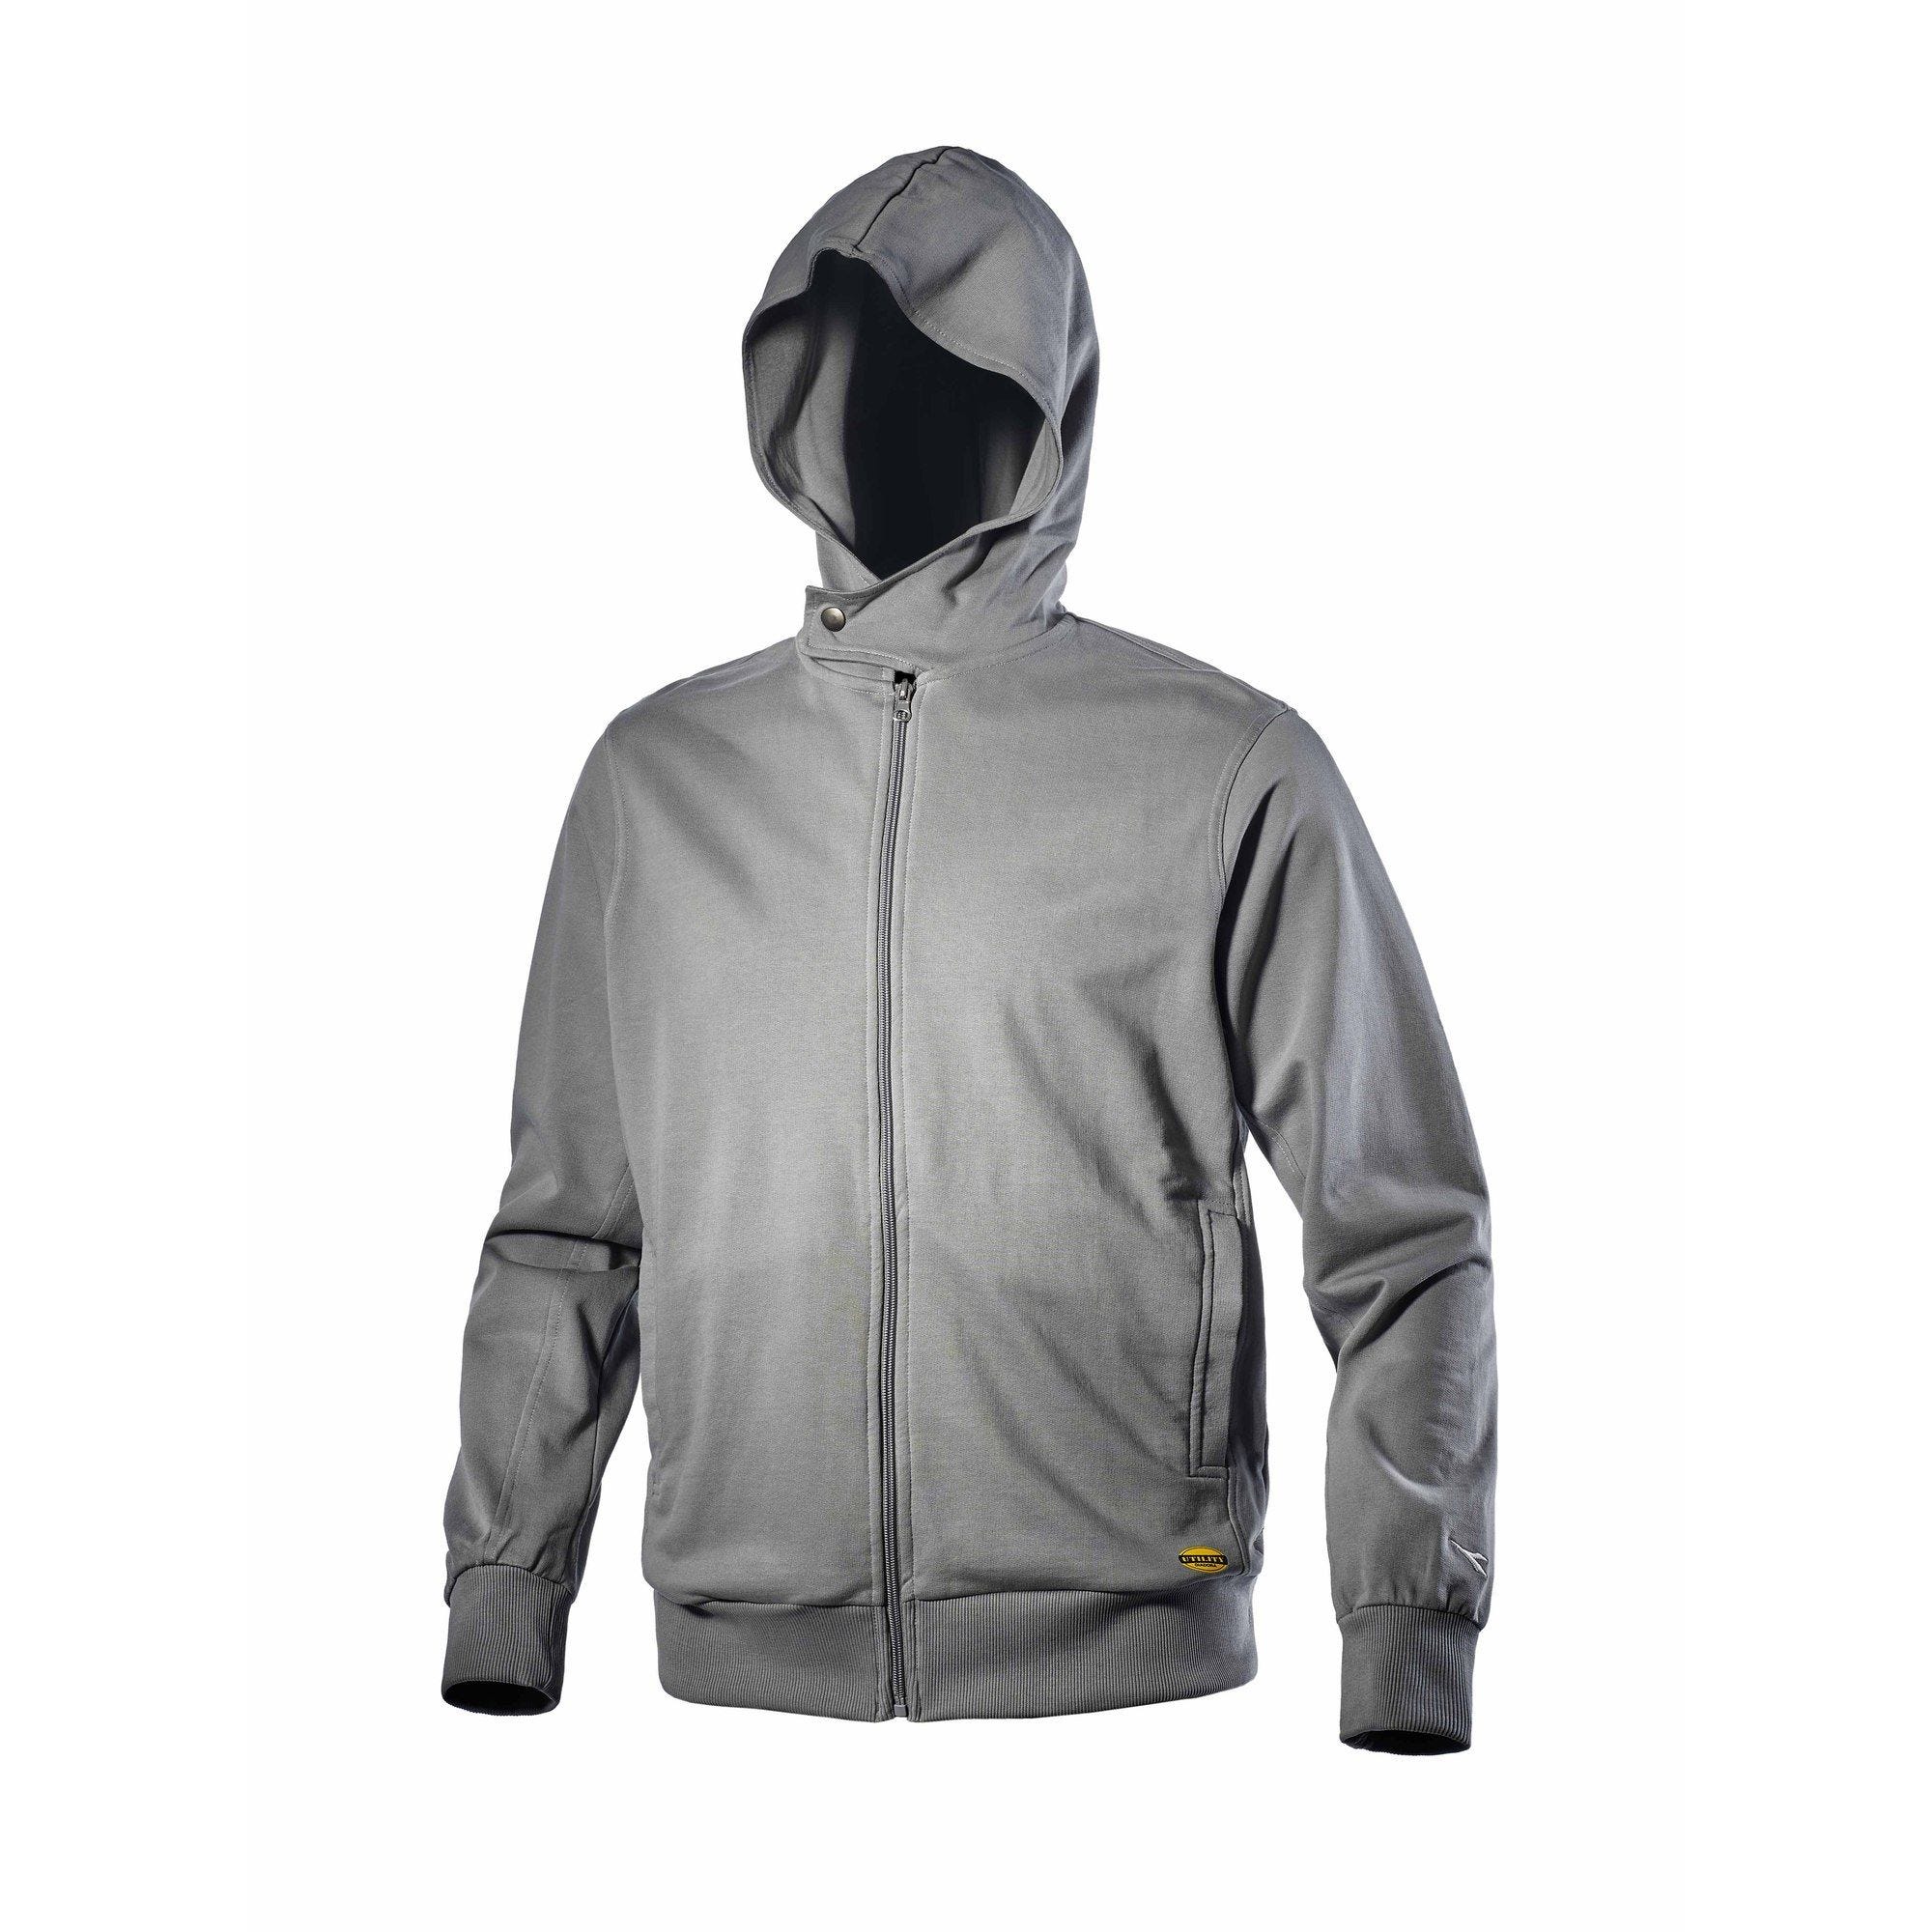 Sweatshirt THUNDER gris TXL - DIADORA SPA - 702.157767.XL 0